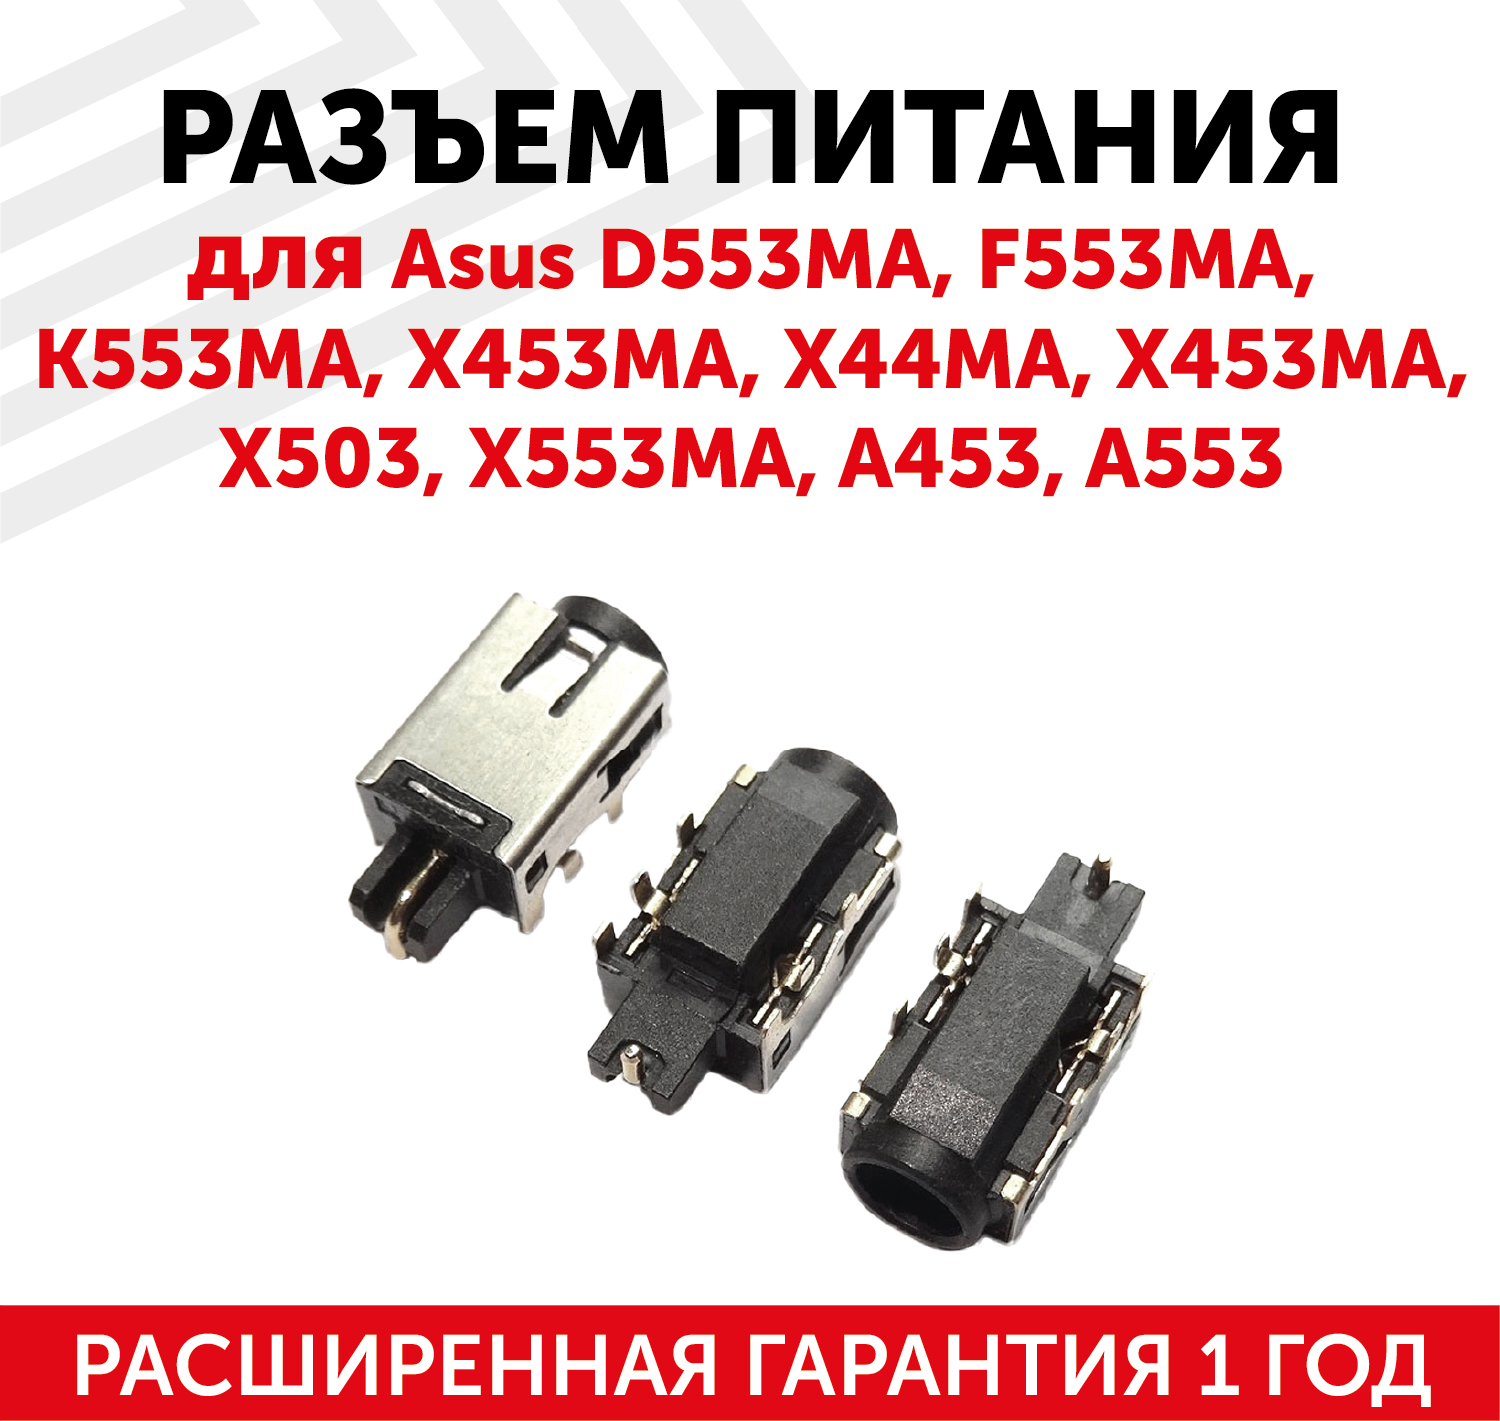 Разъем PJ828 для ноутбука Asus D553MA, F553MA, K553MA, X453MA, X44MA, X453MA, X503, X553MA, A453, A553